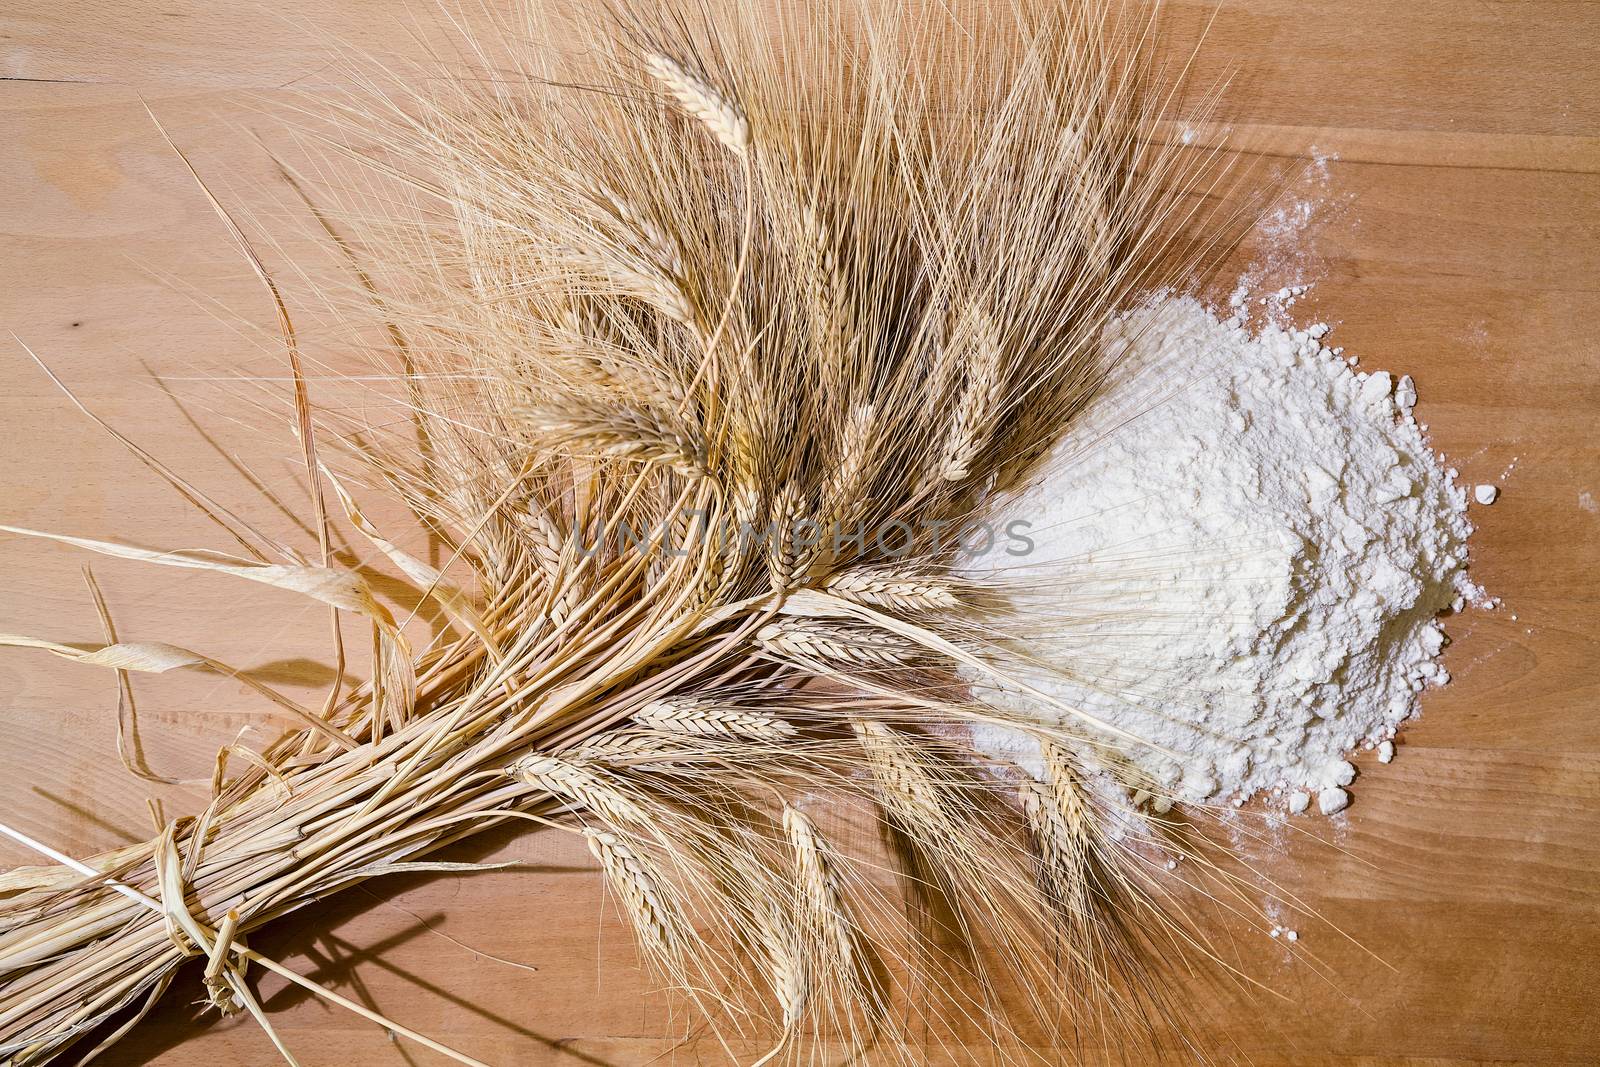 Ear of corn and flour by LuigiMorbidelli